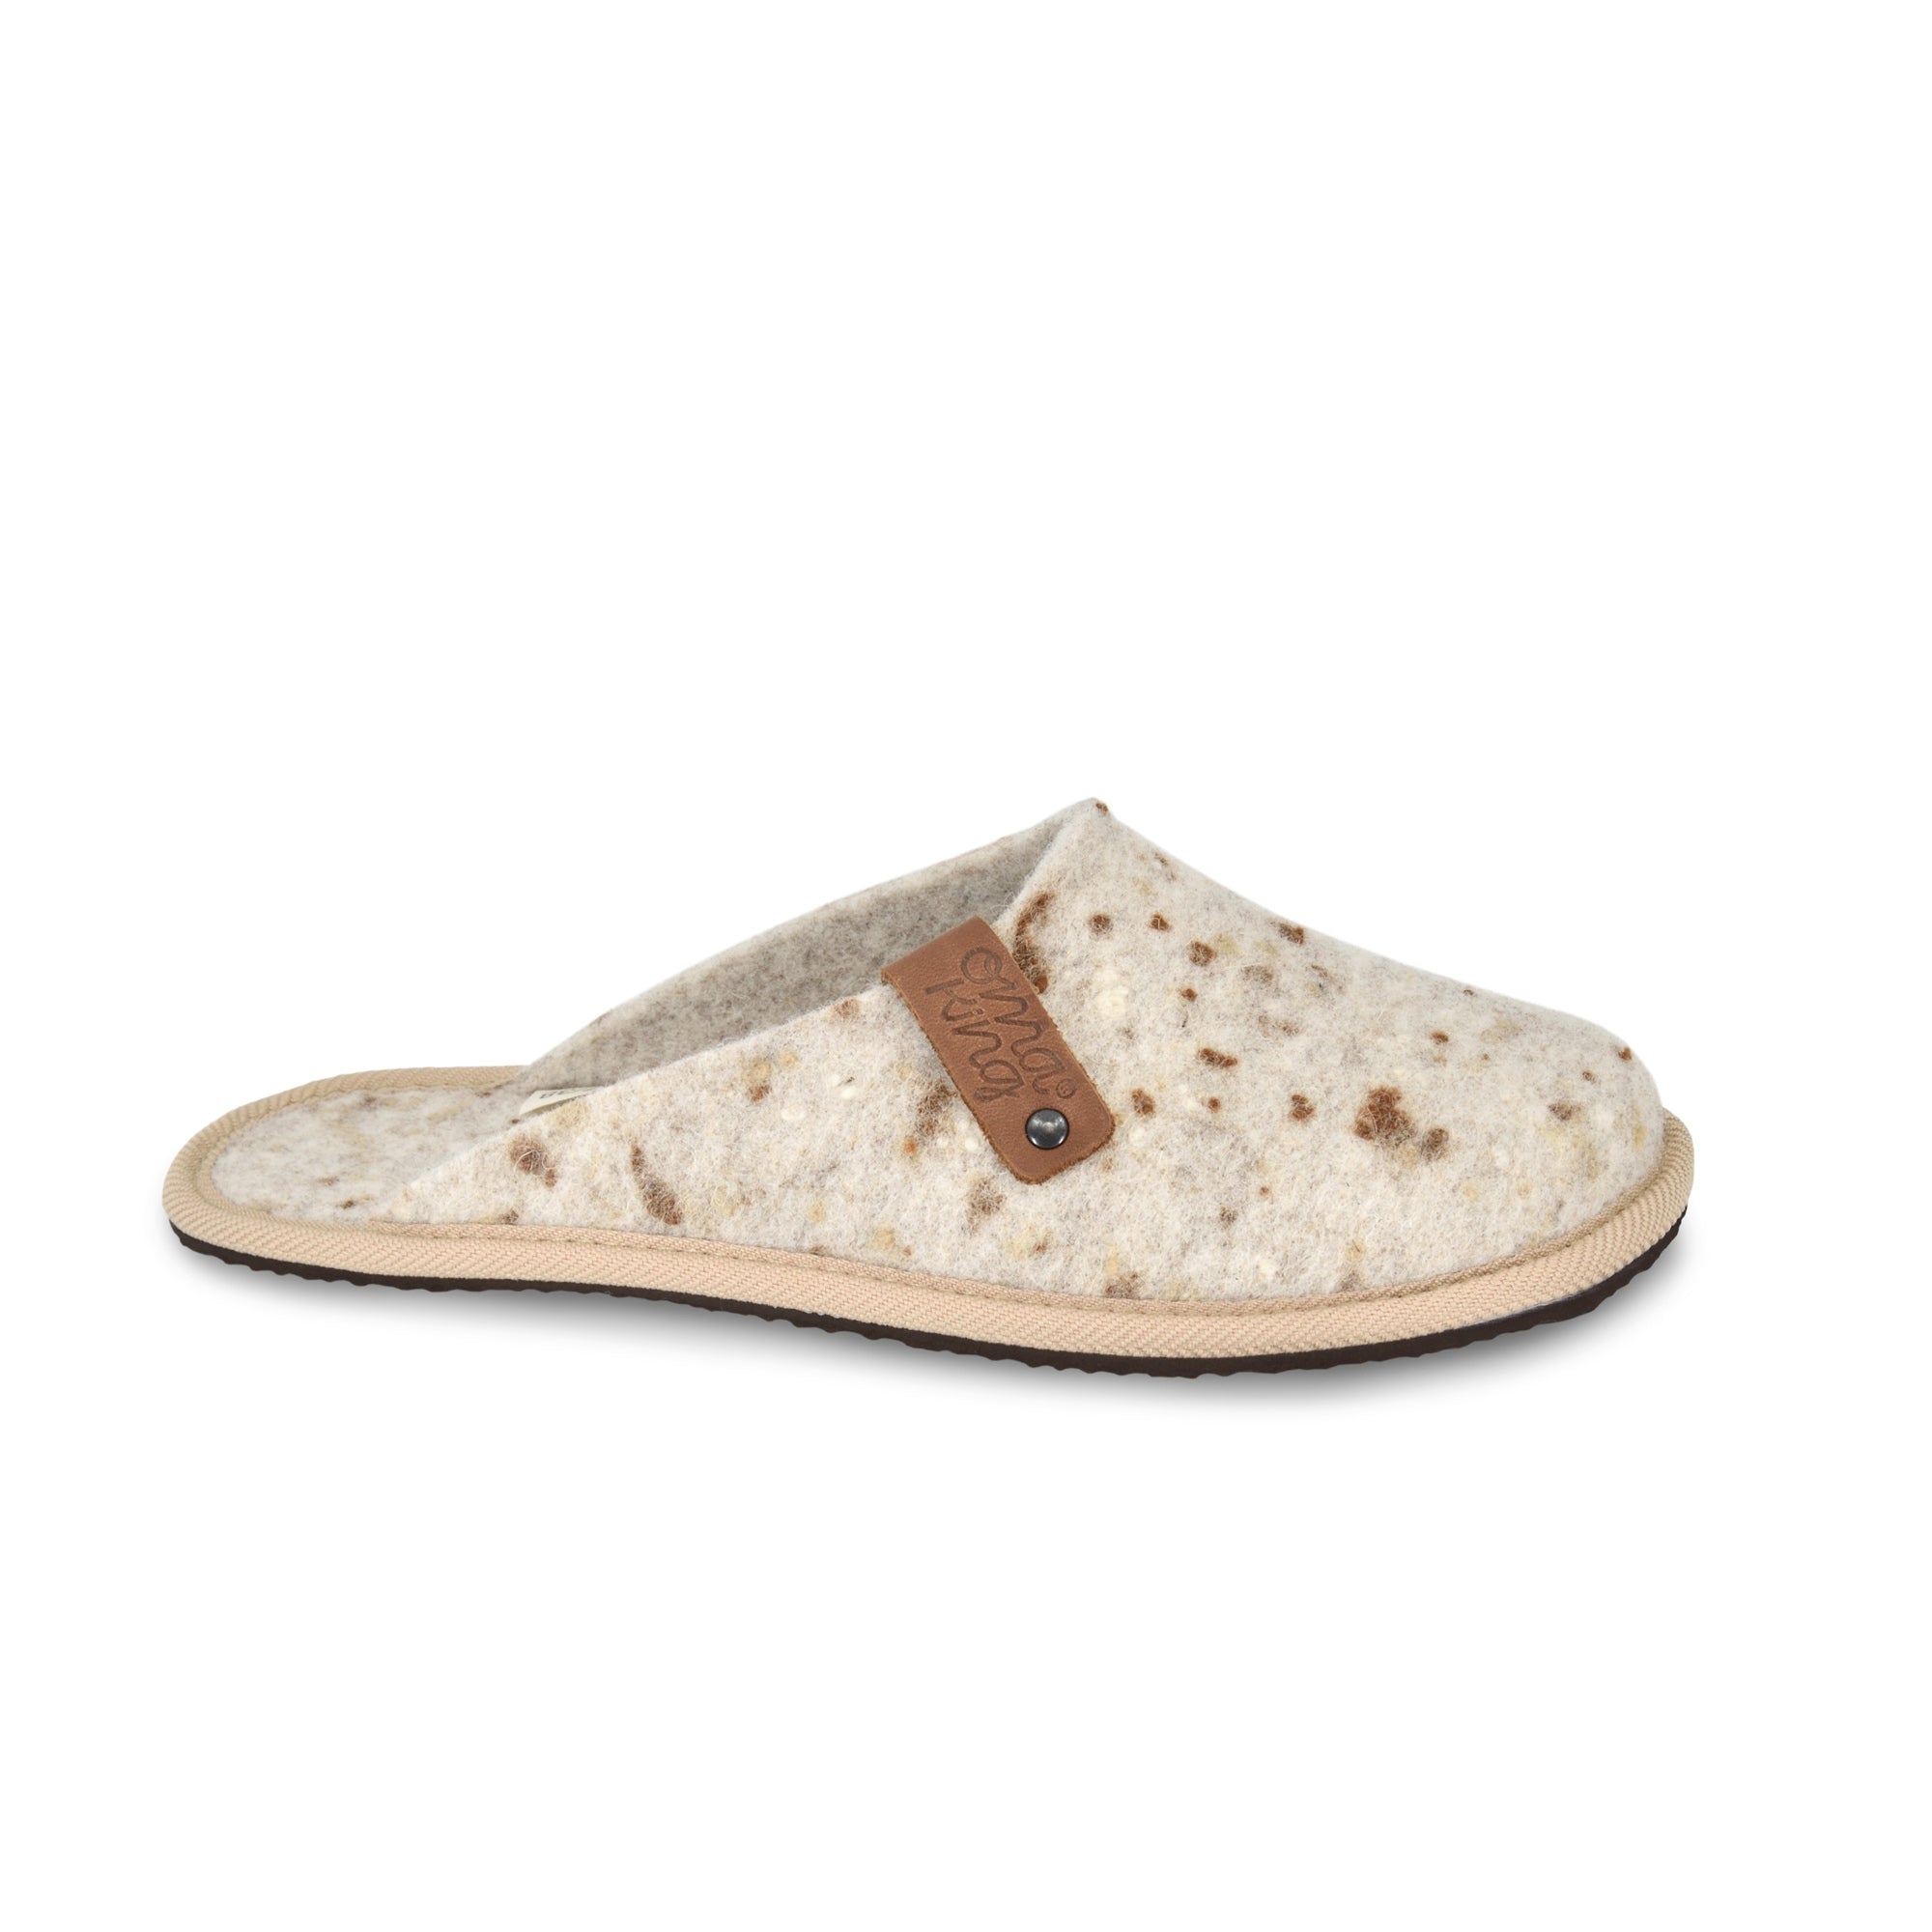 Unisex woolen slippers SPOT, beige. LIMITED EDITION